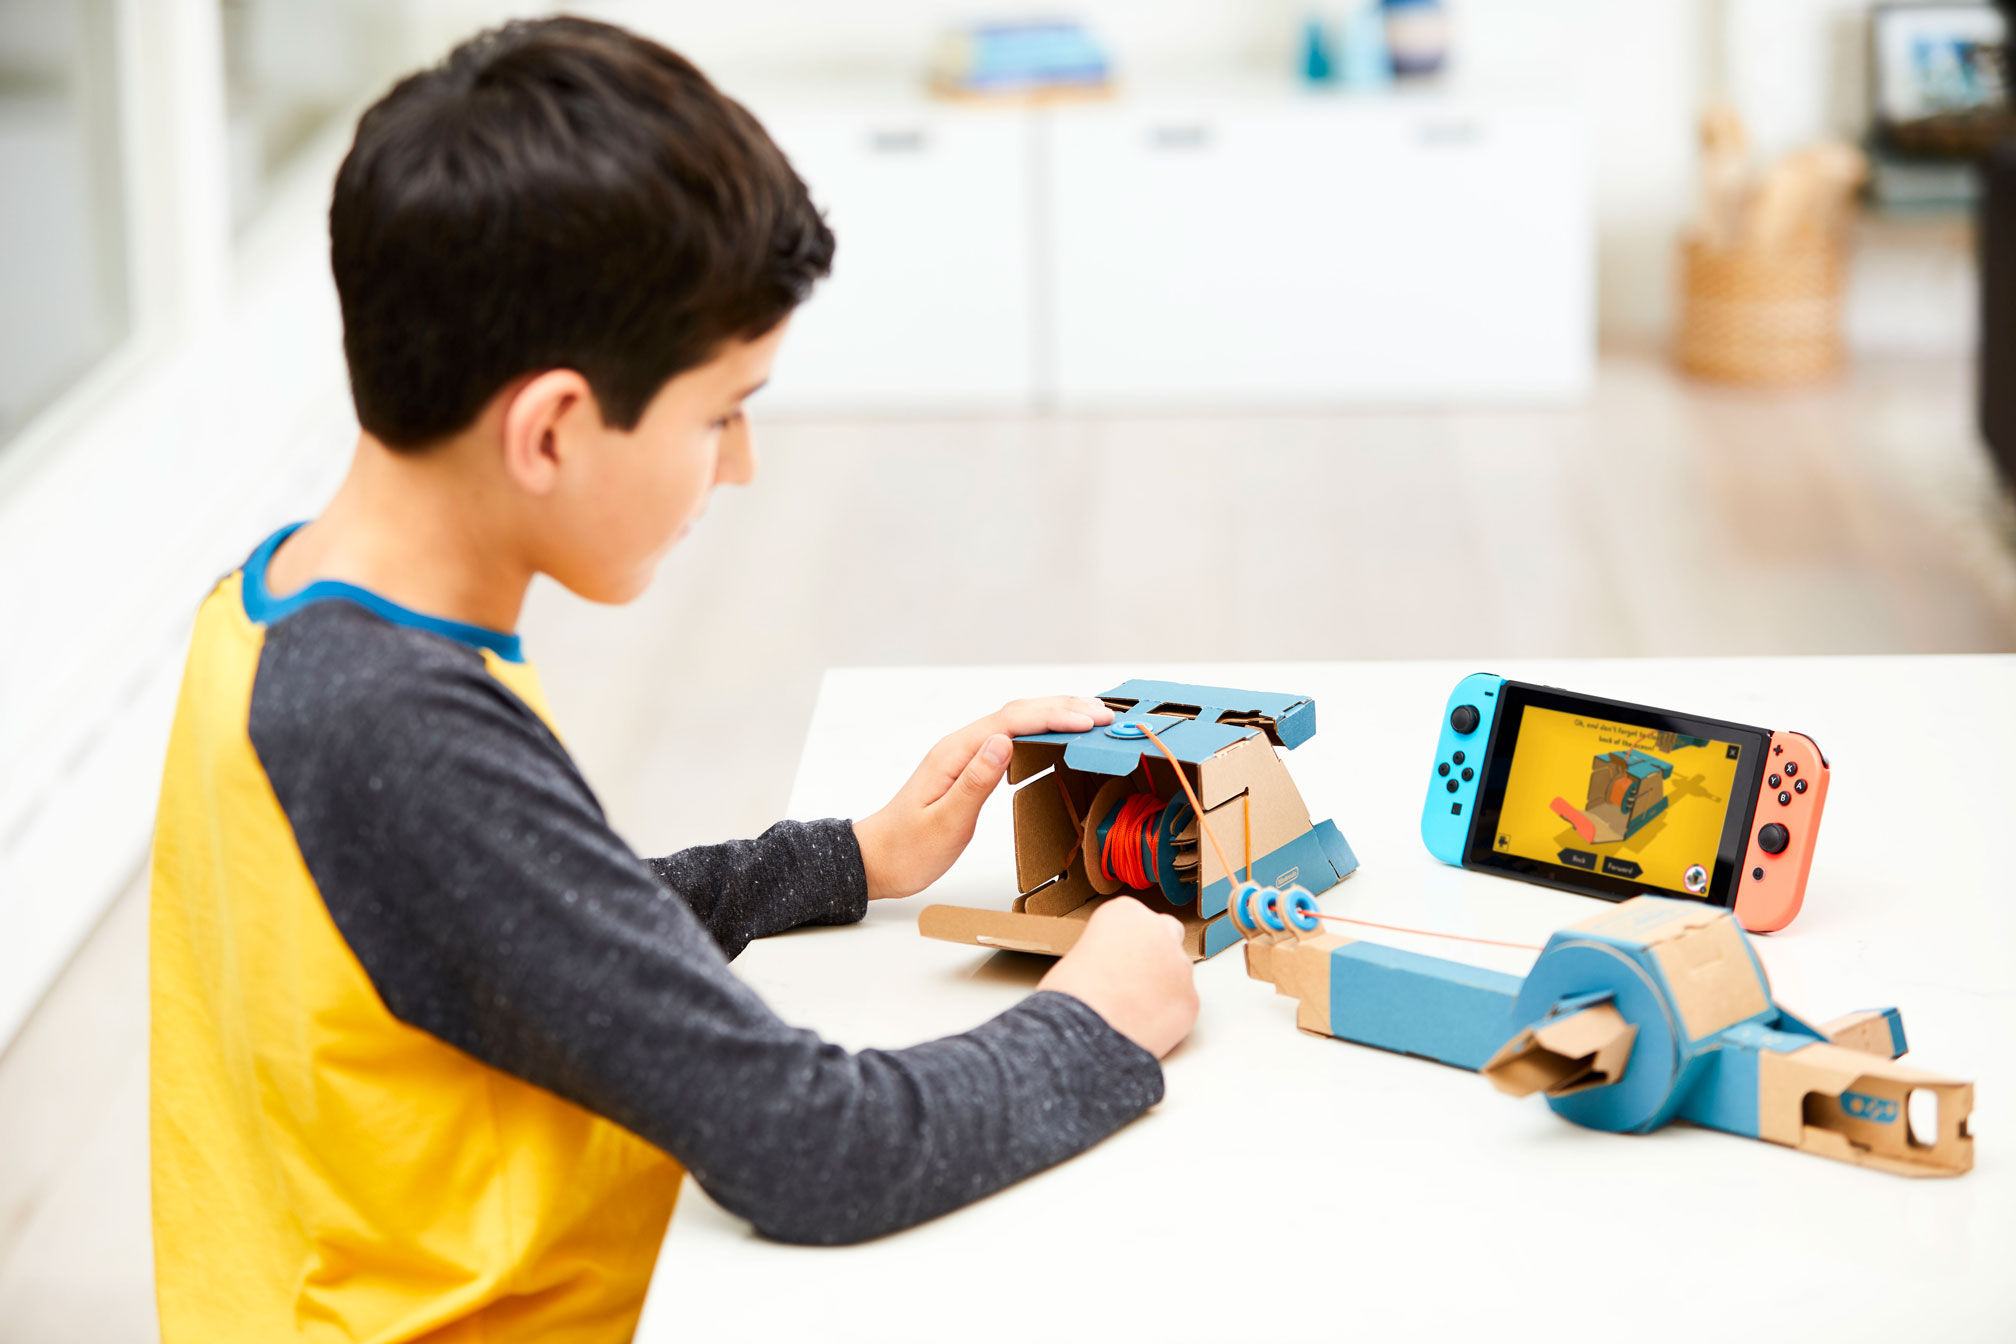 Digital edge: Nintendo Labo reinvents console gaming